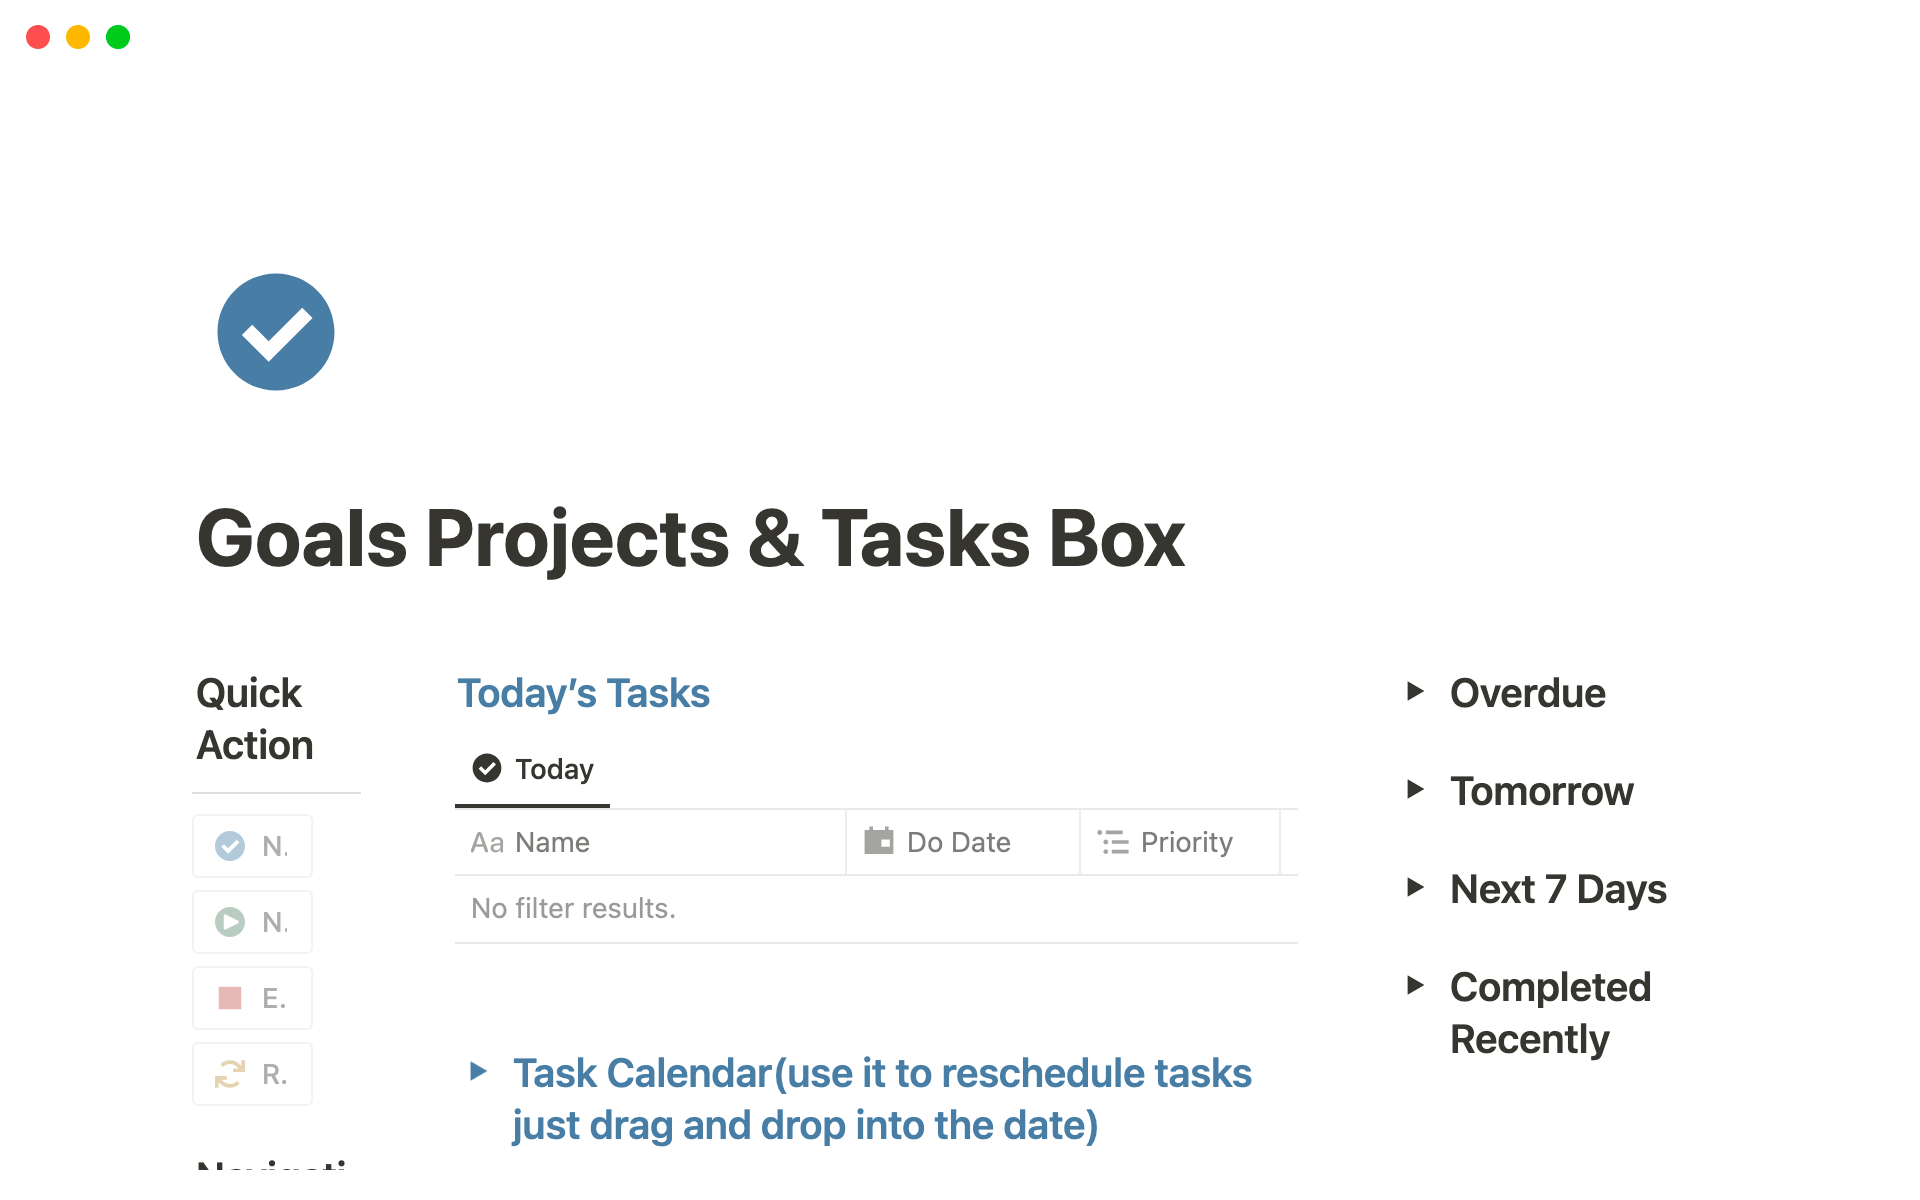 goals-projects-tasks-box-darius-nick-desktop